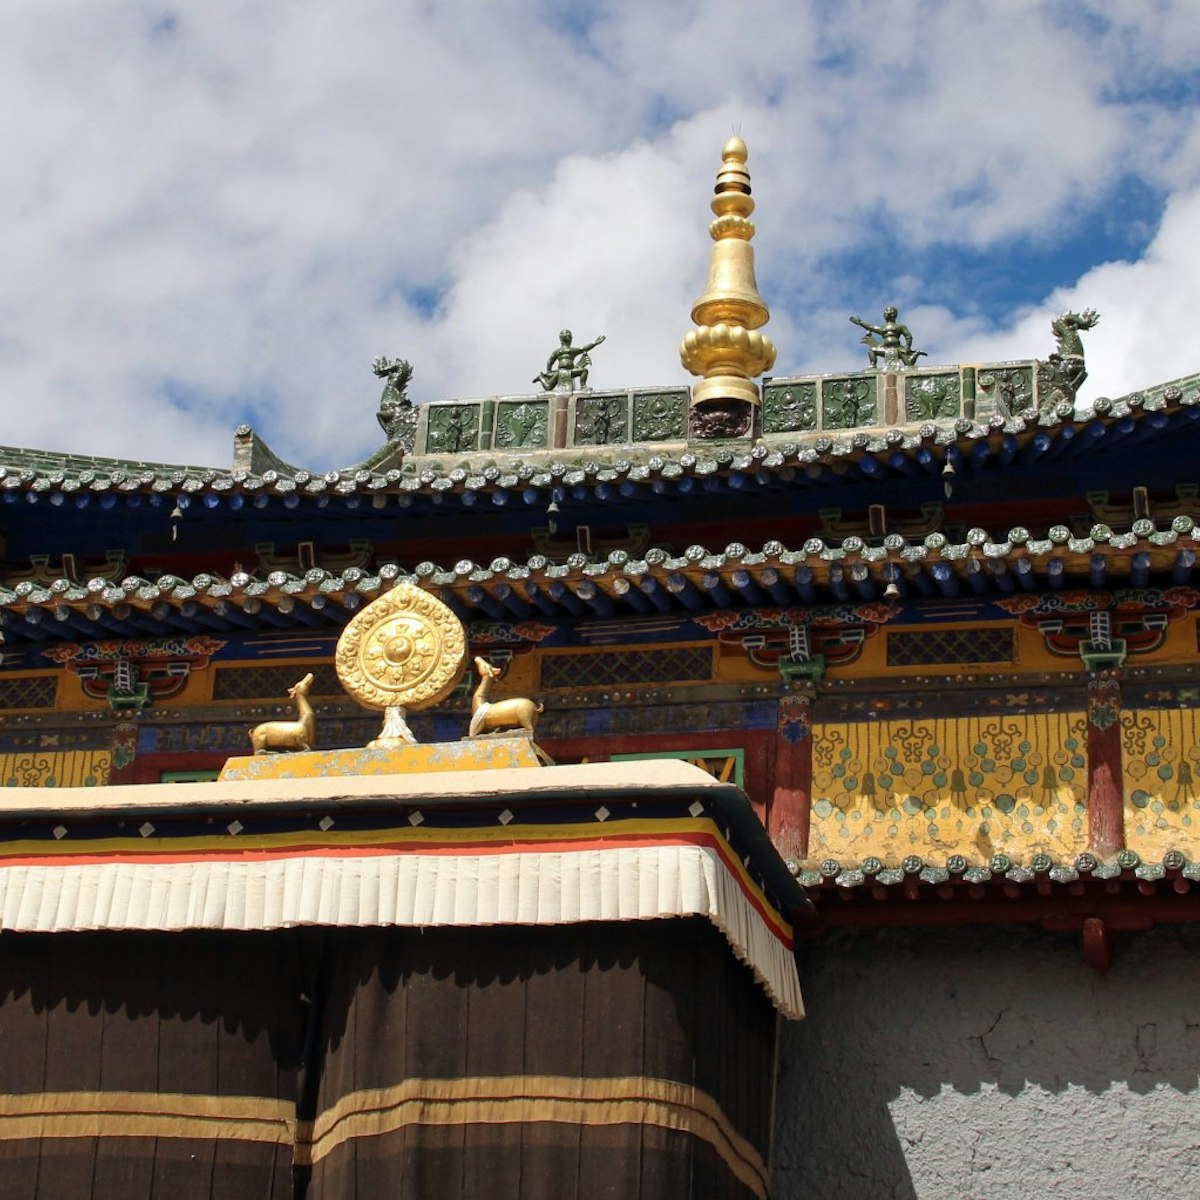 Roof Decorations Of Shalu Monastery Near Shigatse, Tibet - stock photo

Photo taken in Lhasa, China